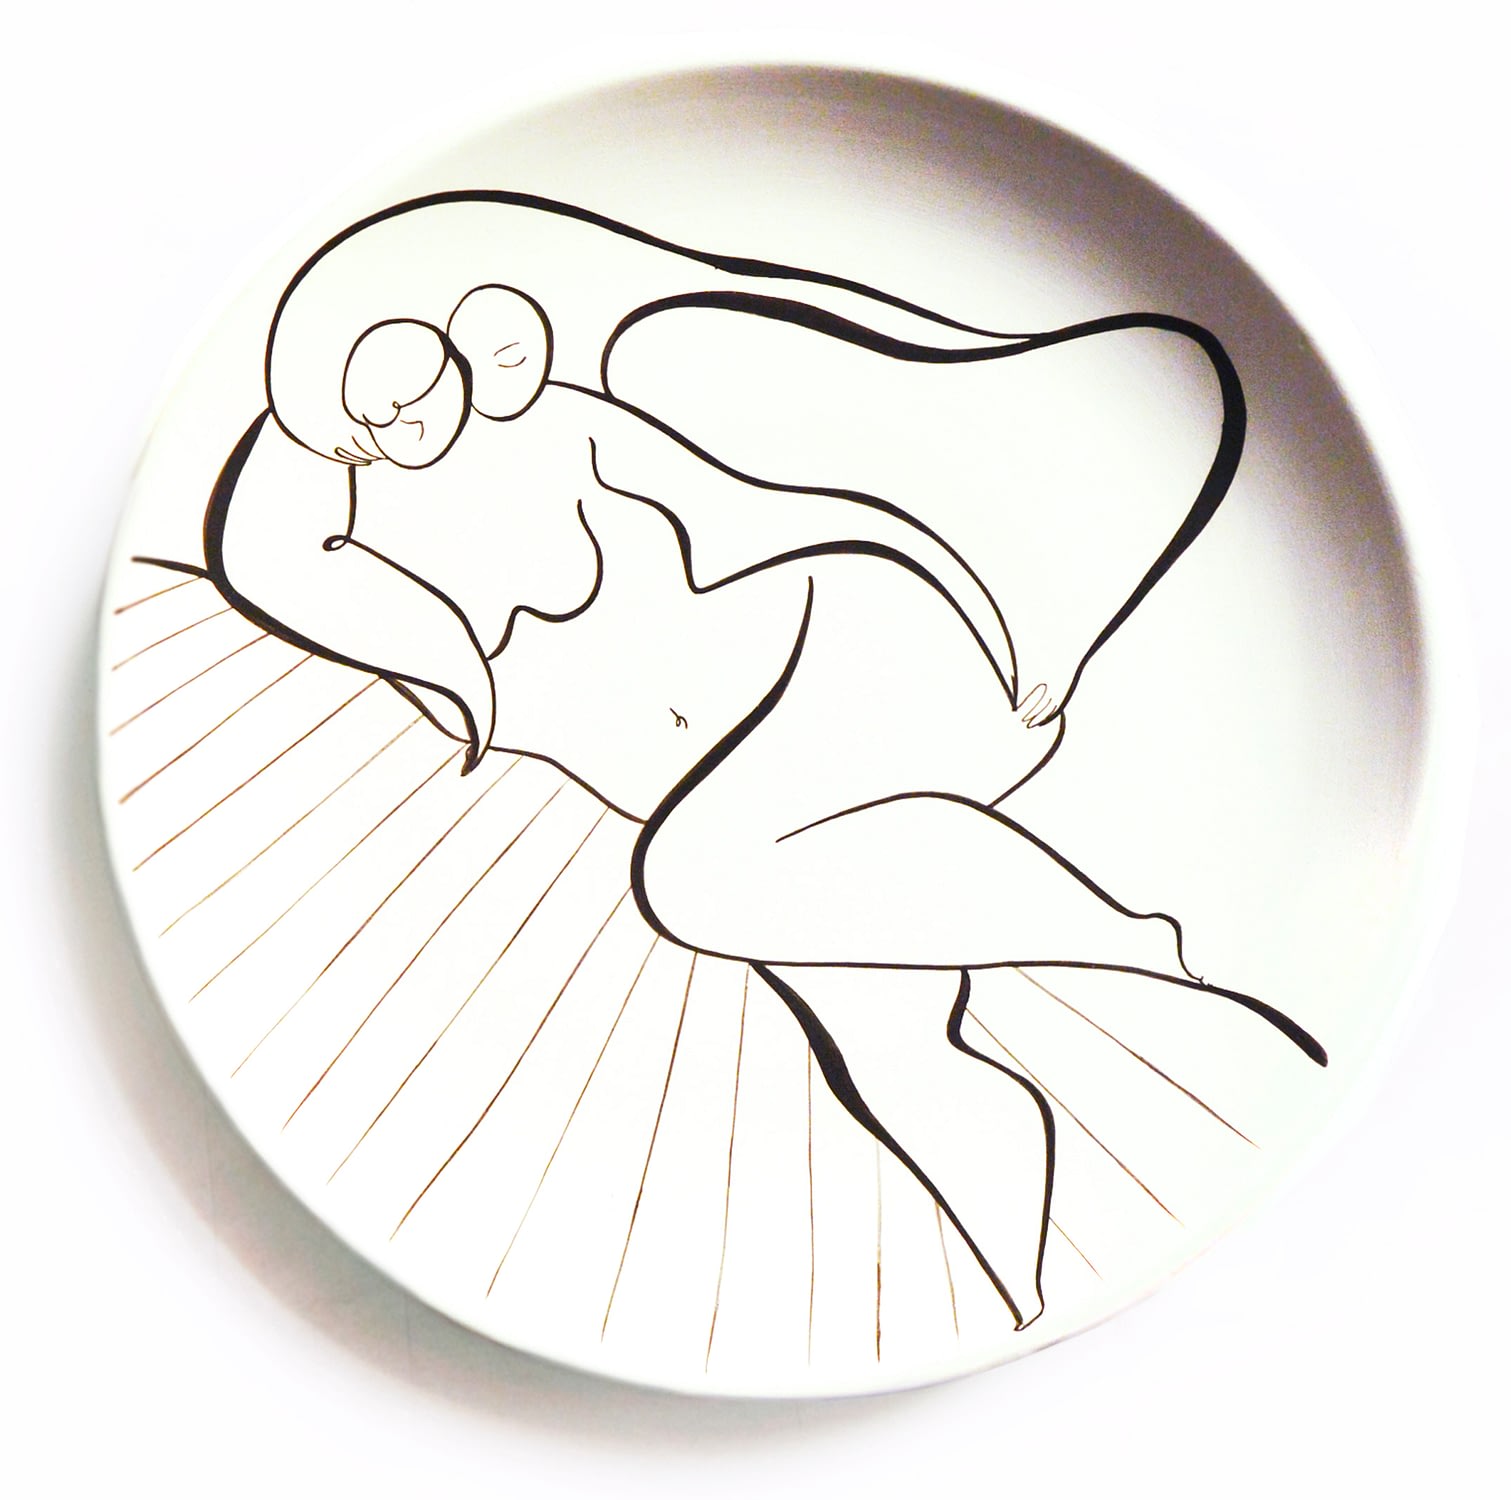 Andrea Santamarina Contemporary artist spain Art Gallery artistic ceramic drawing plates Love 9